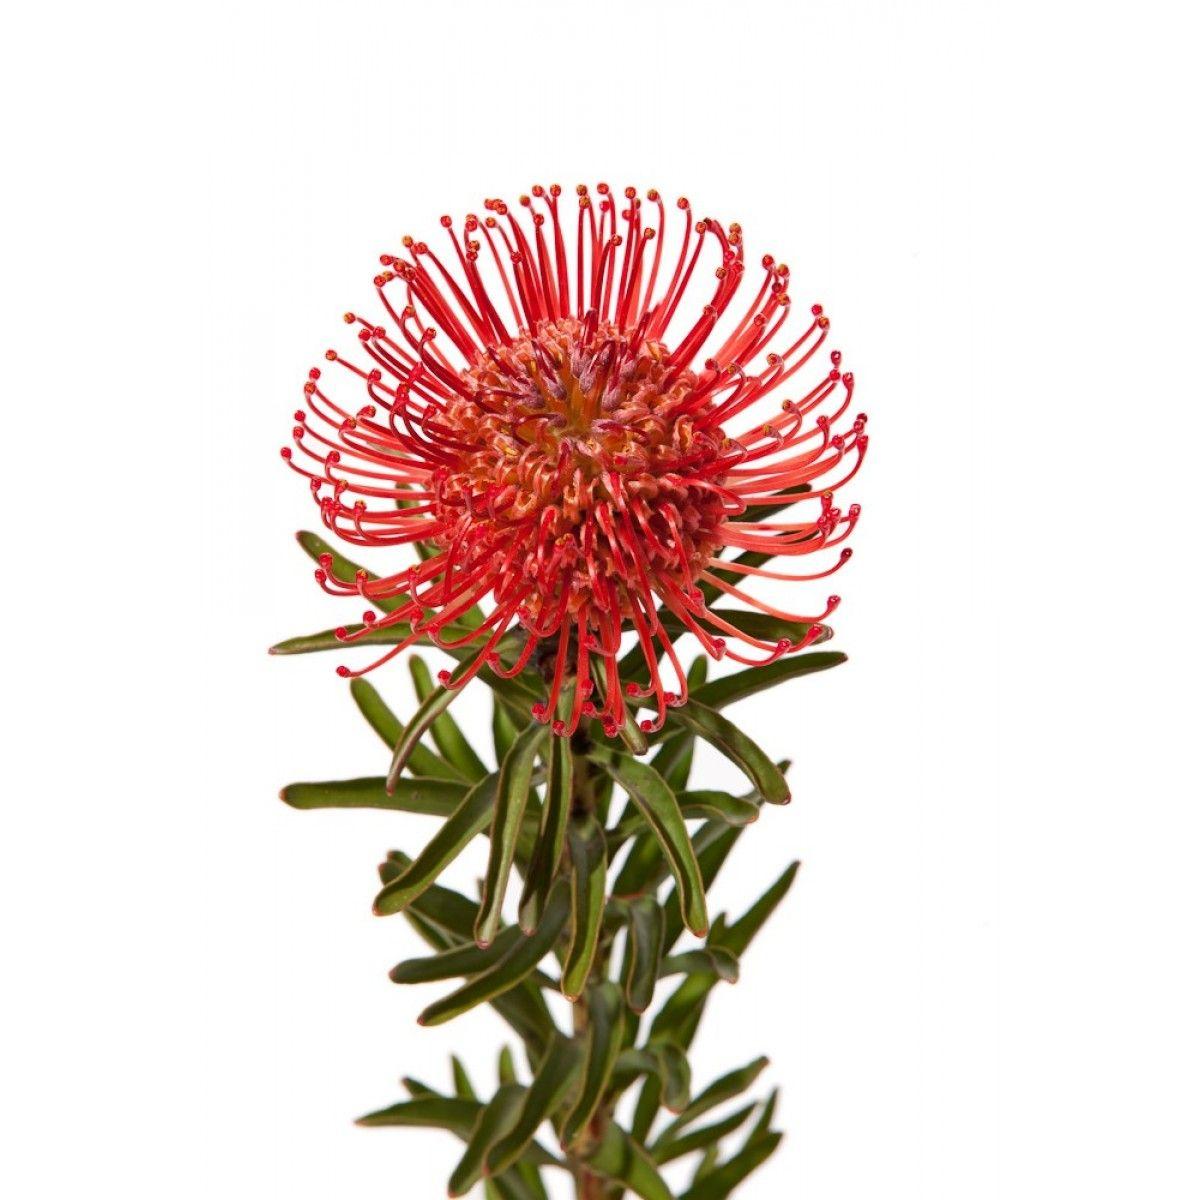 Protea (Pincushion) flower. Beautiful inspiration for thread